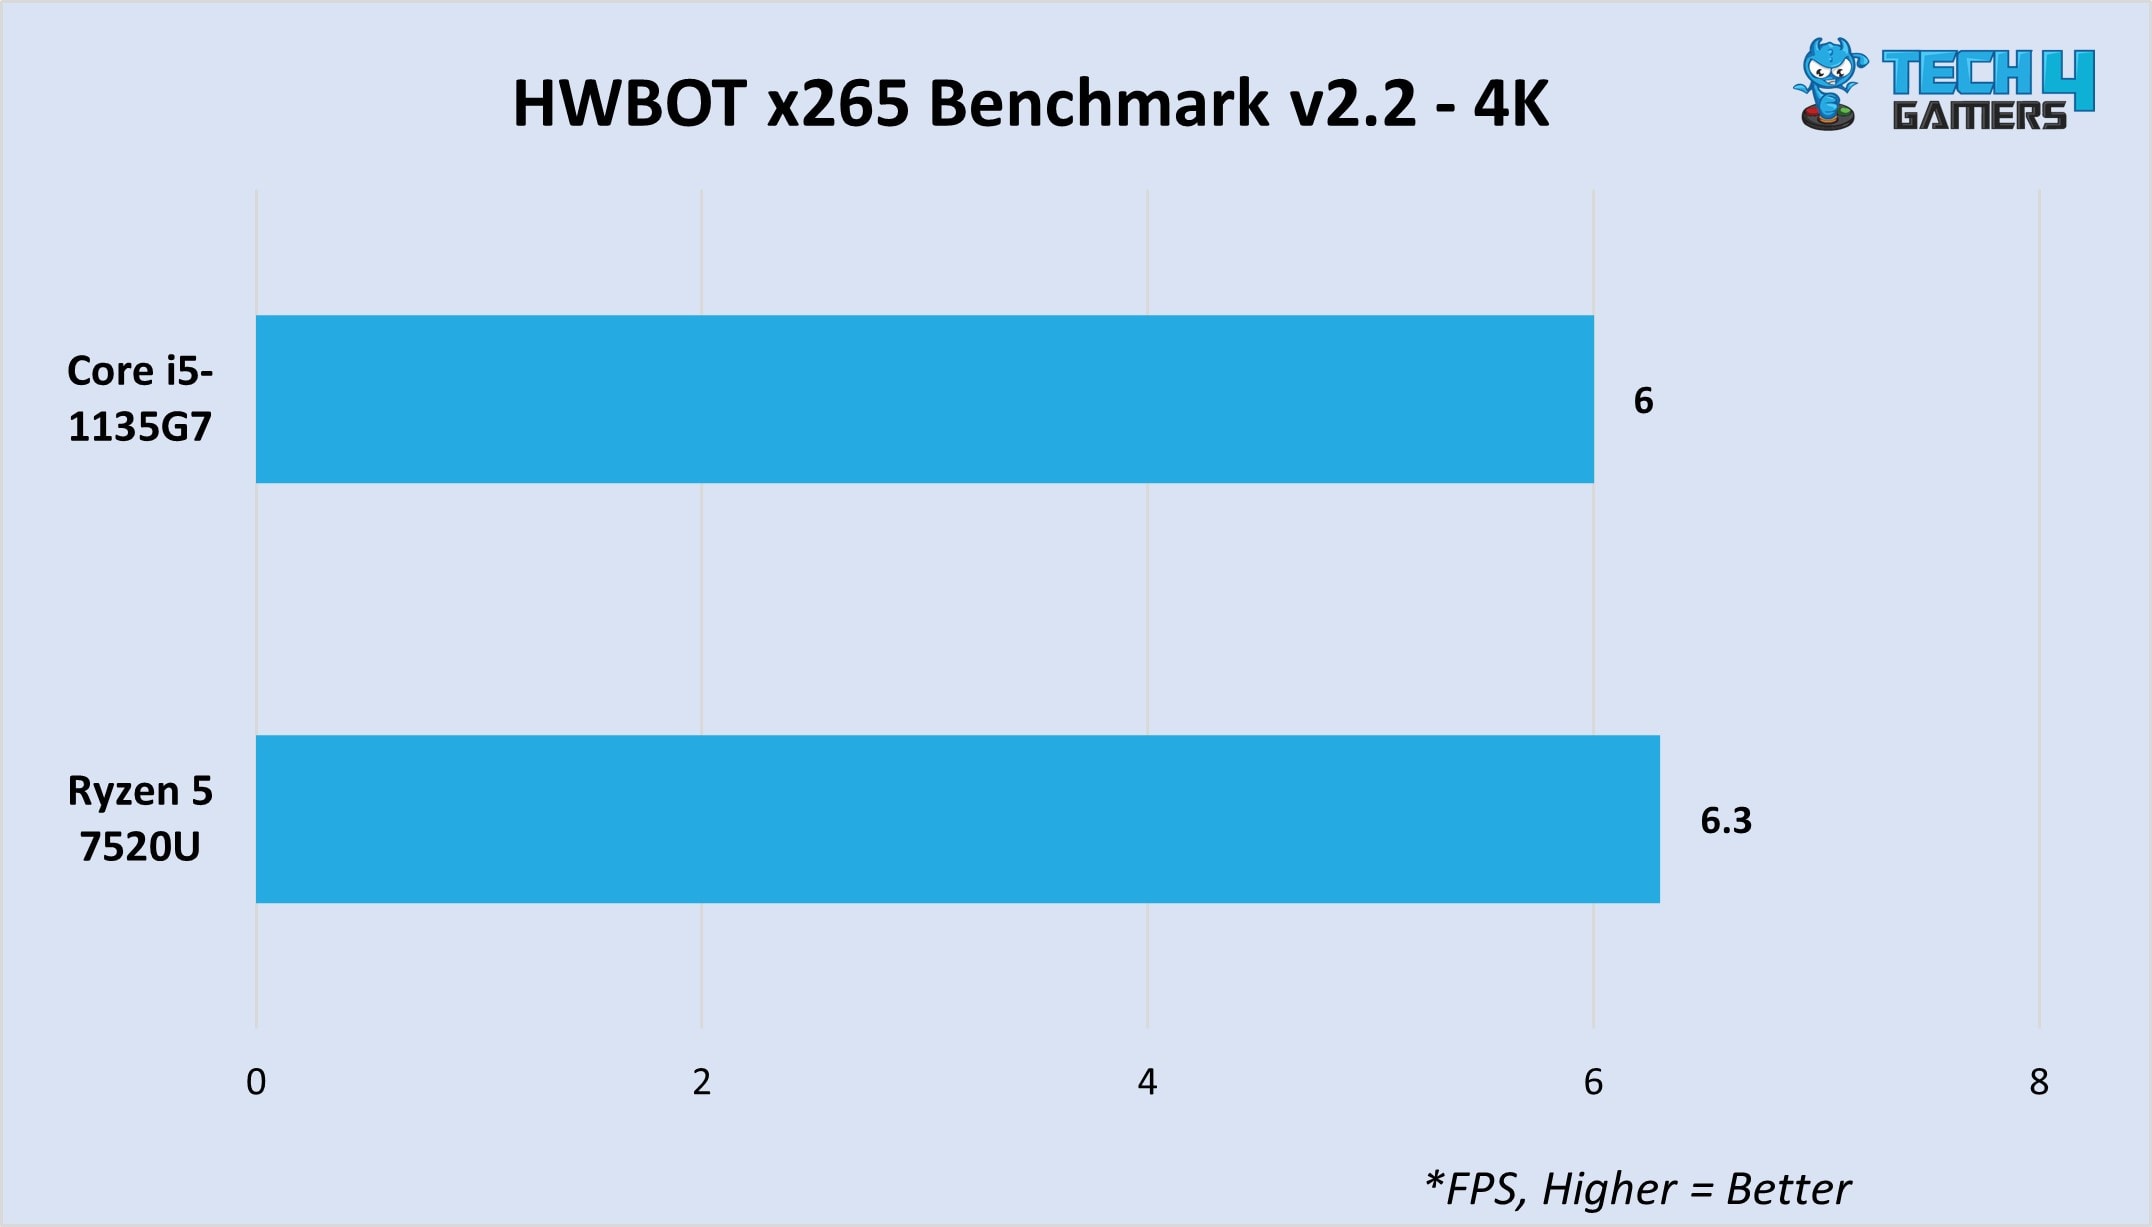 HWBOT x265 Benchmark V2.2